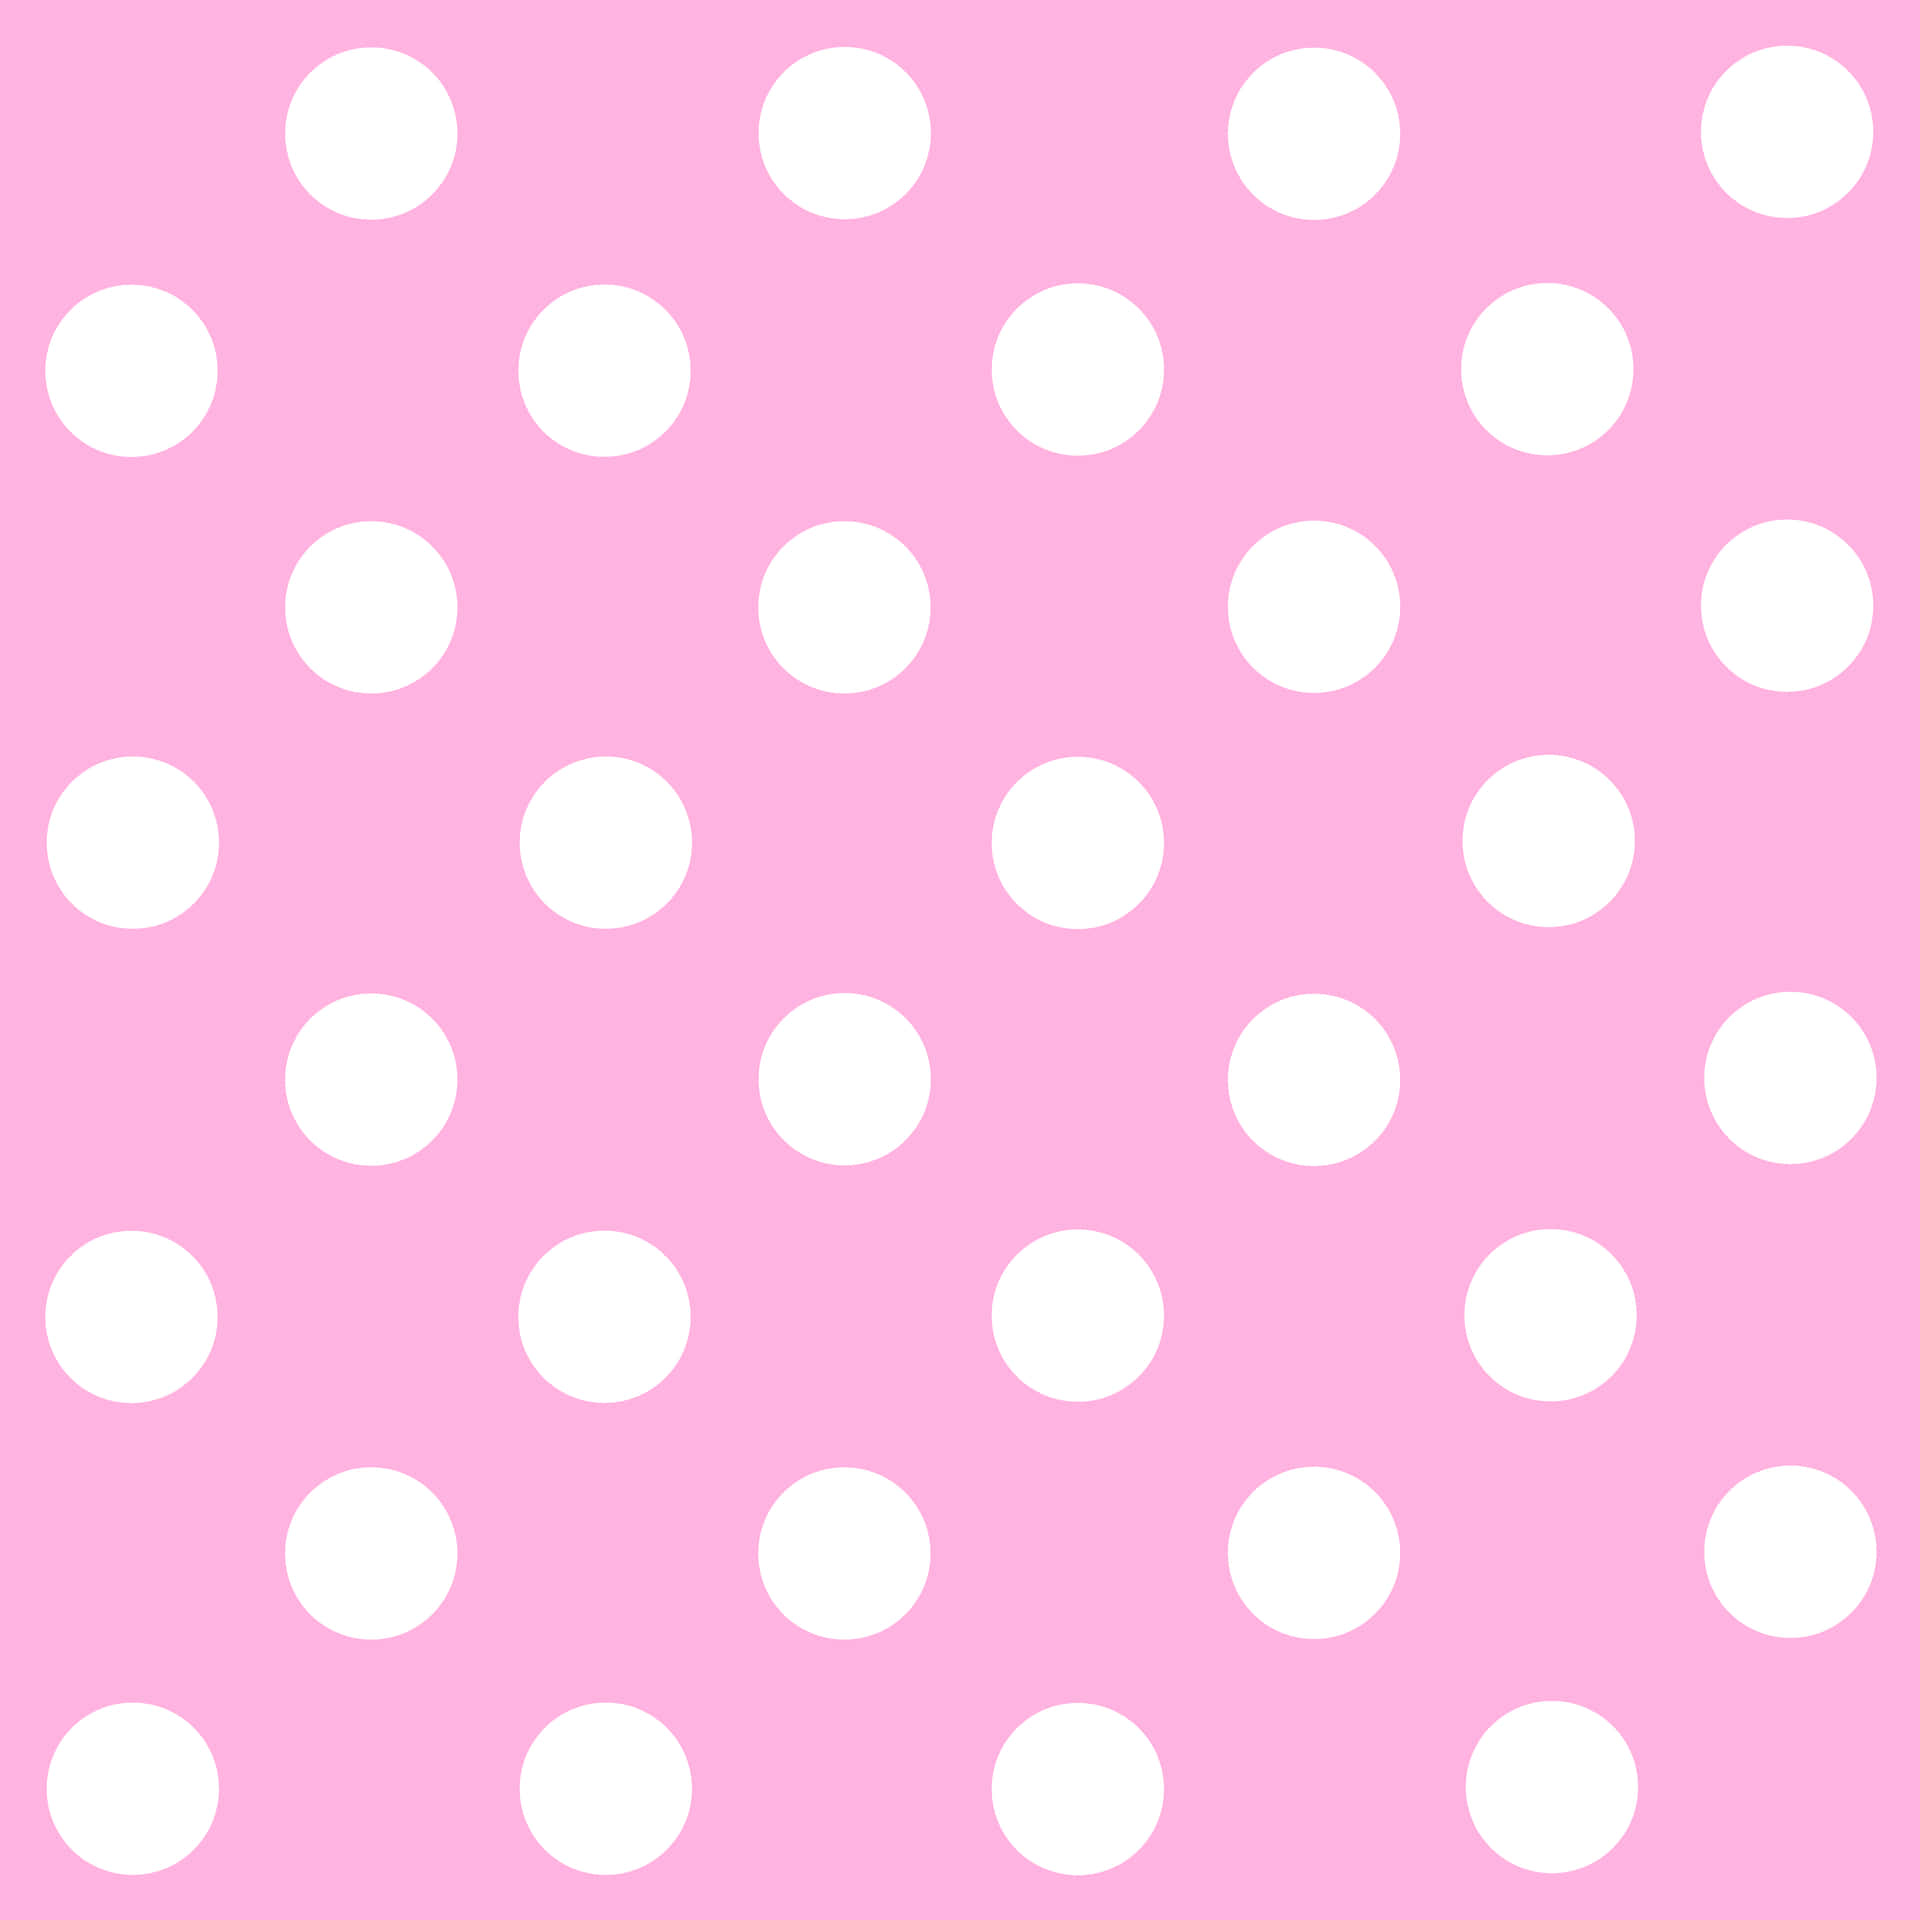 Fun Pink And White Polka Dot Pattern Wallpaper